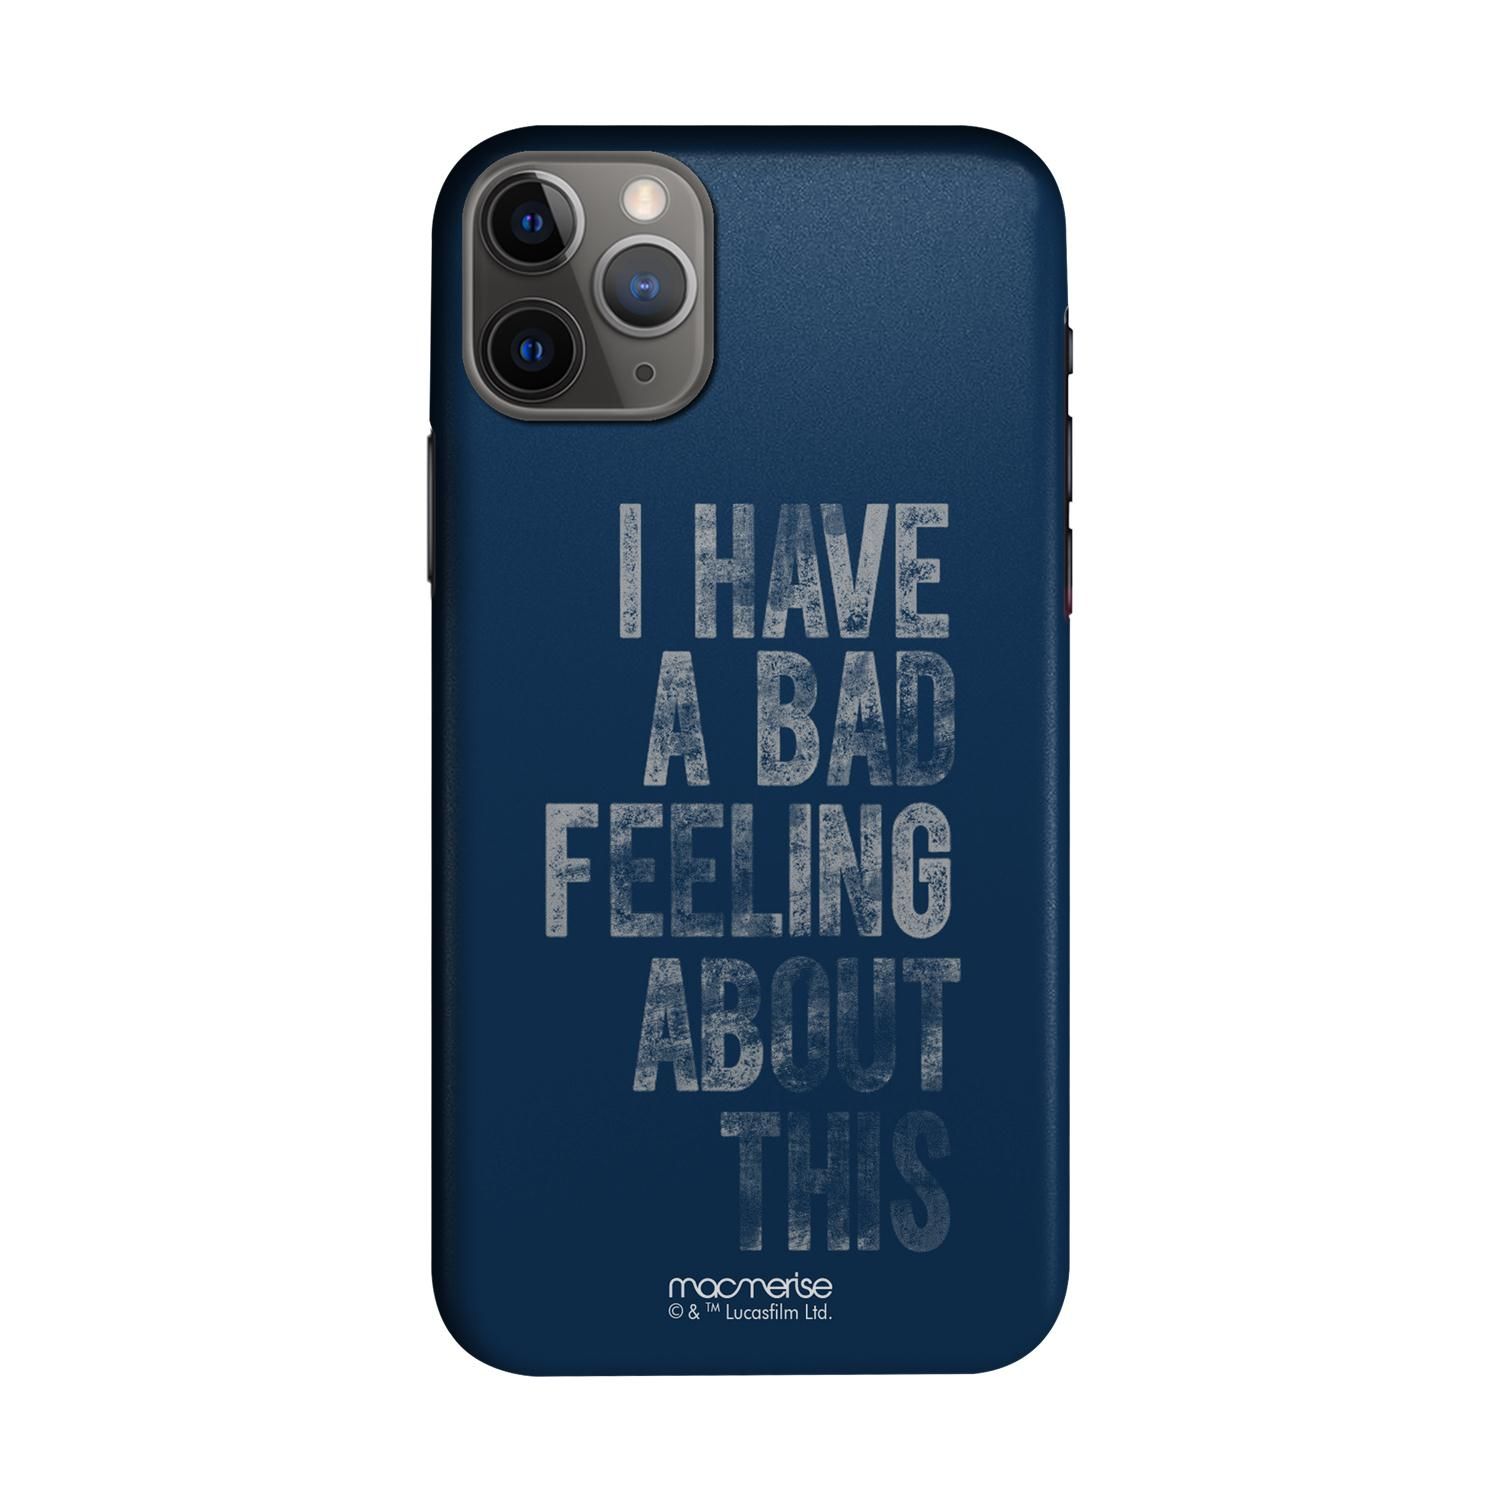 Buy Bad Feeling - Sleek Phone Case for iPhone 11 Pro Max Online